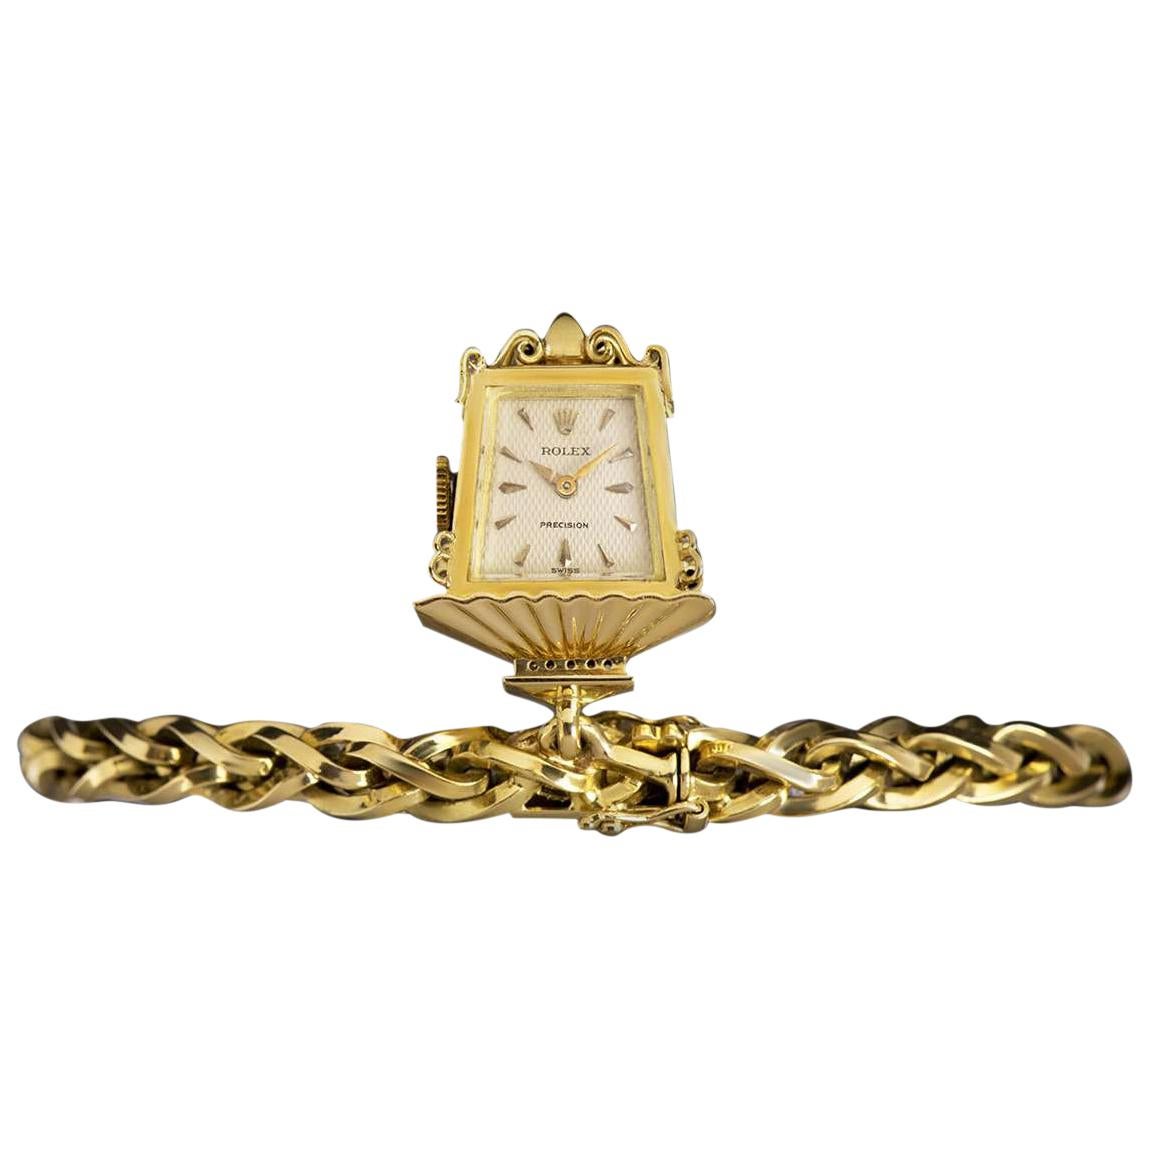 Rolex Rare Precision Lantern Vintage Silver Dial Bracelet Watch